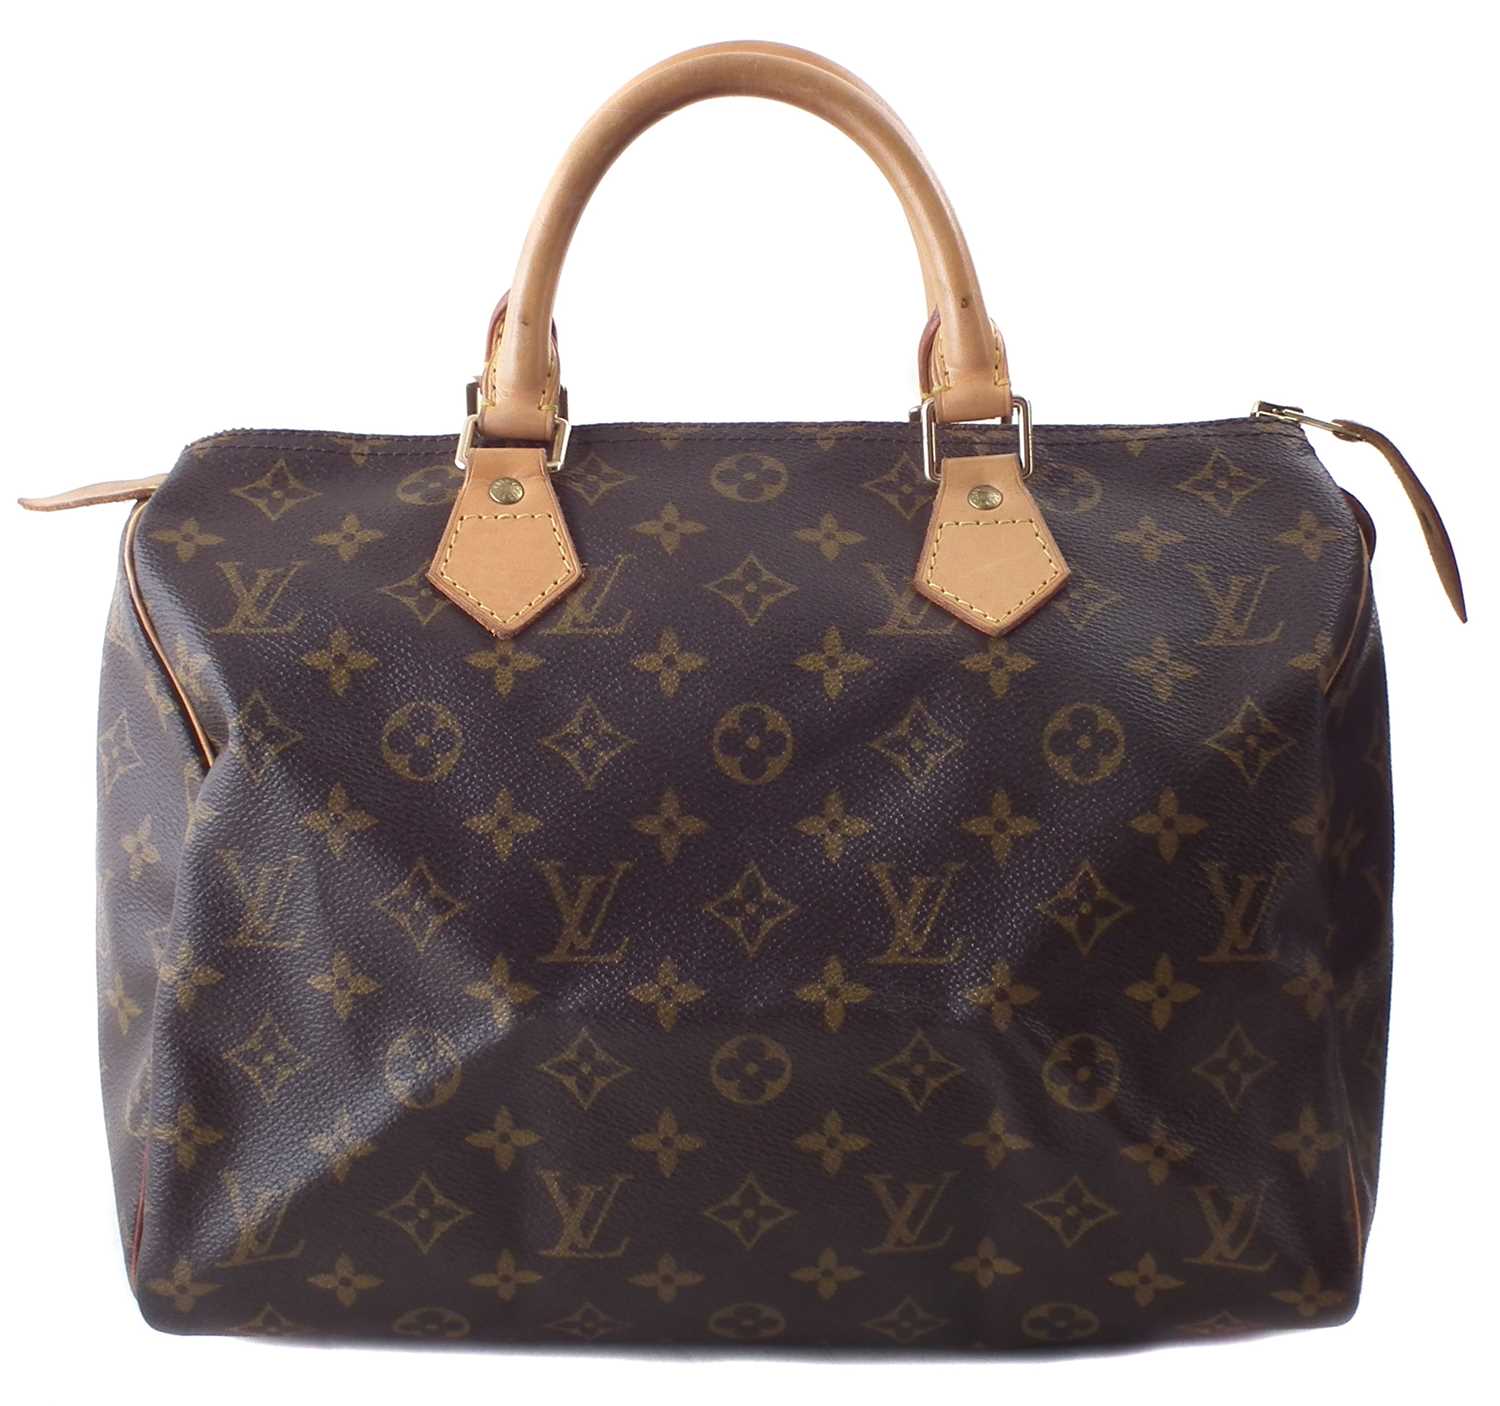 Lot 7 - A Louis Vuitton monogram Speedy 30 handbag